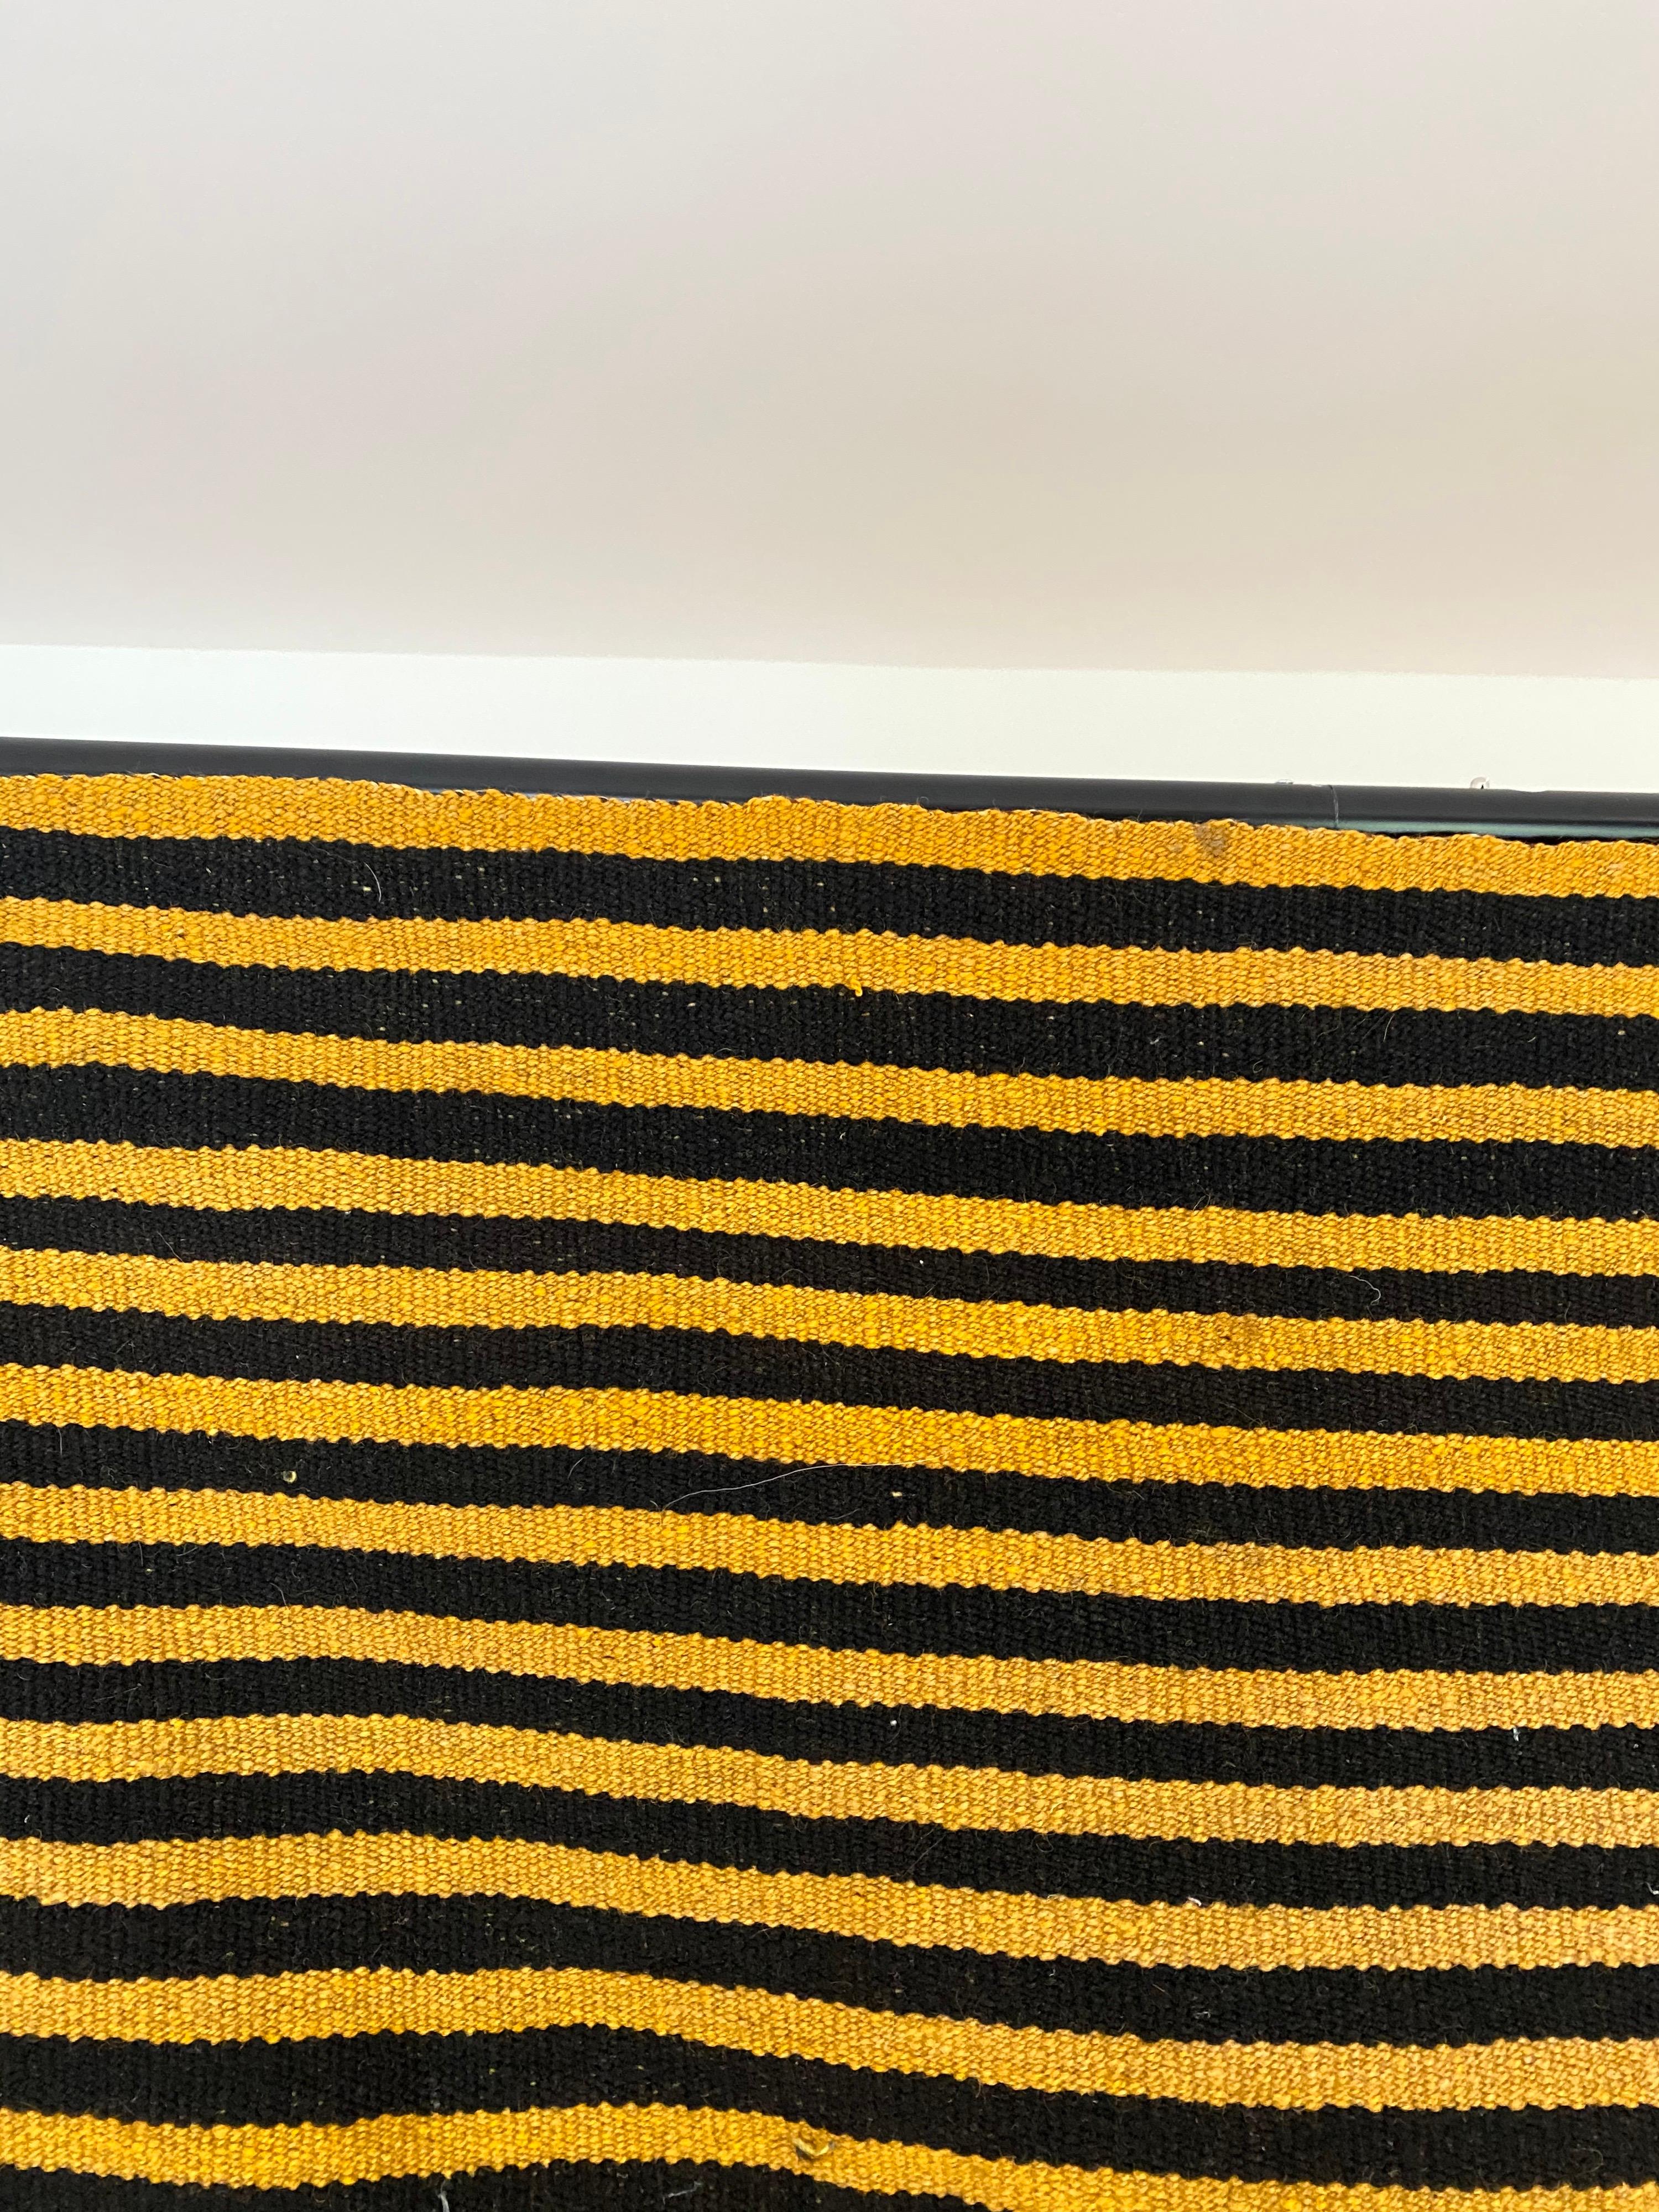 striped area rug